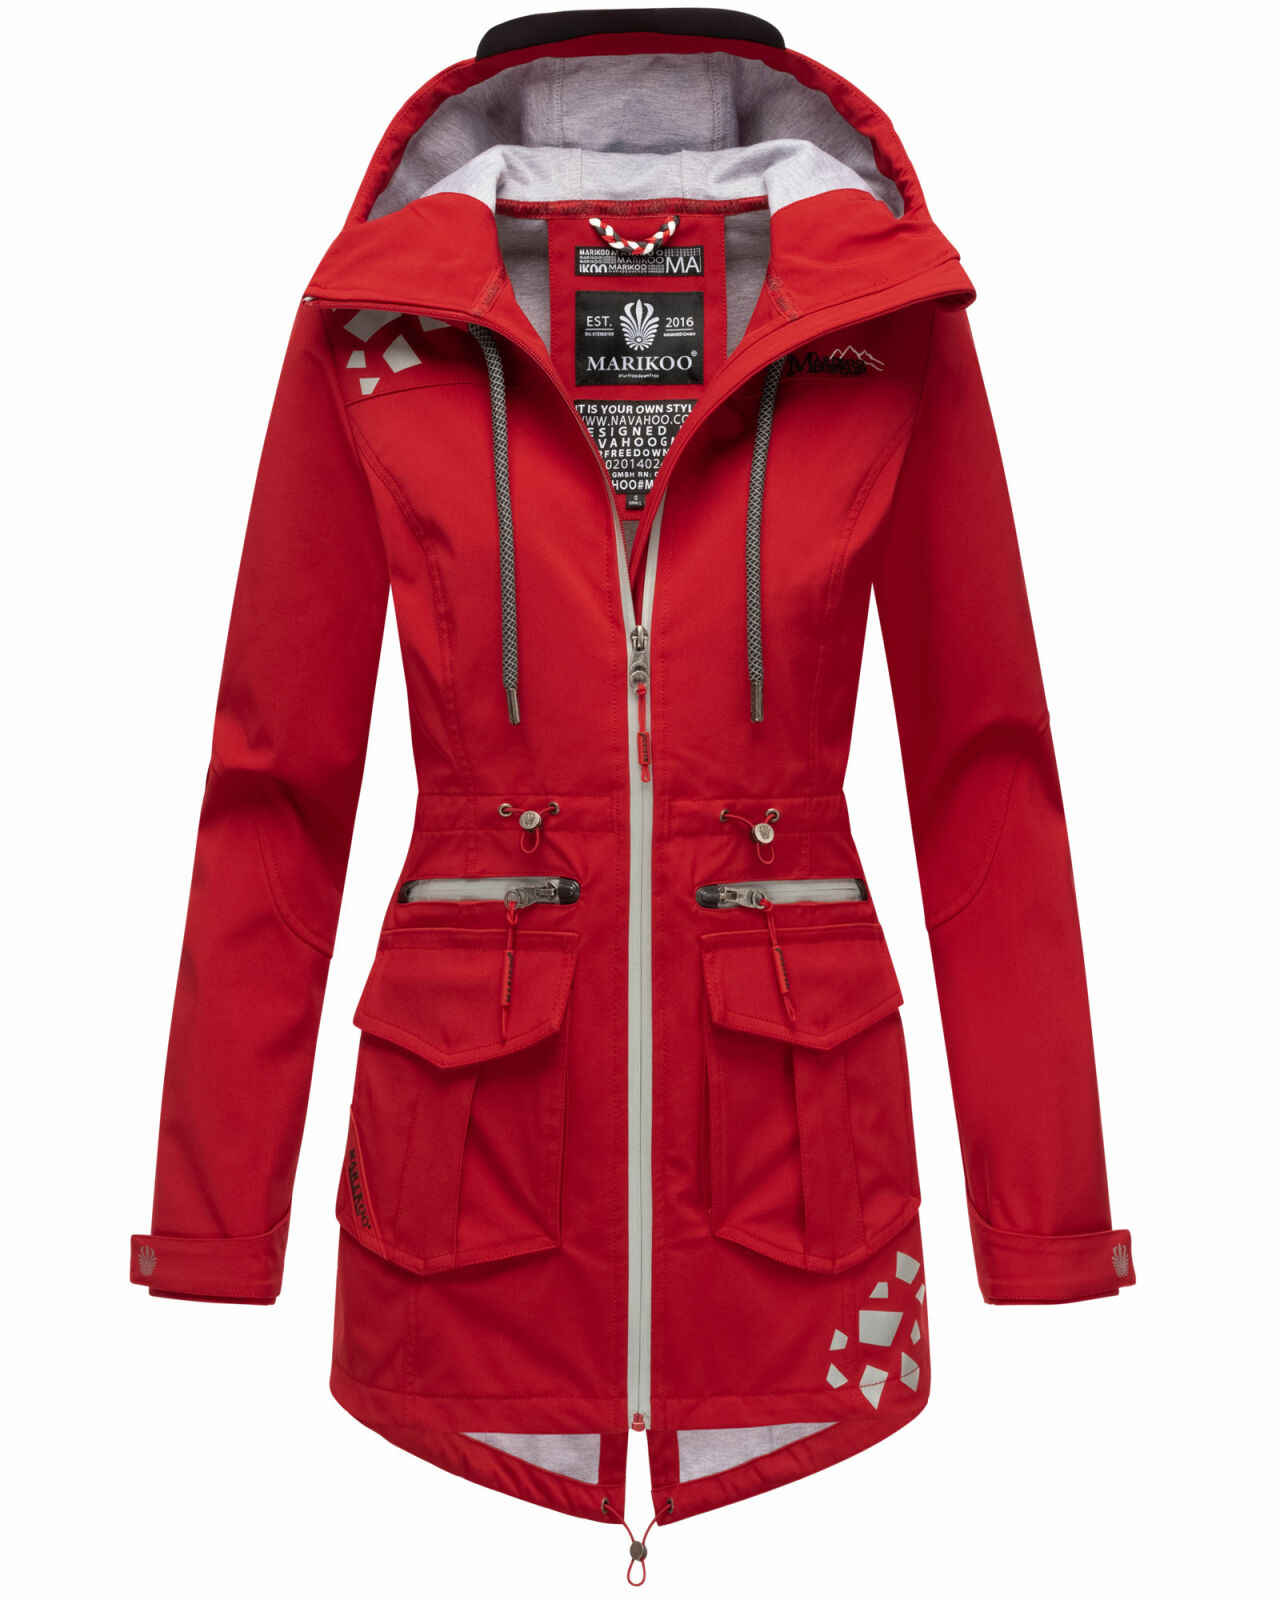 Marikoo Ulissaa Damen Softshell Jacke B875 Rot Größe M - Gr. 38 - Gol,  89,90 €